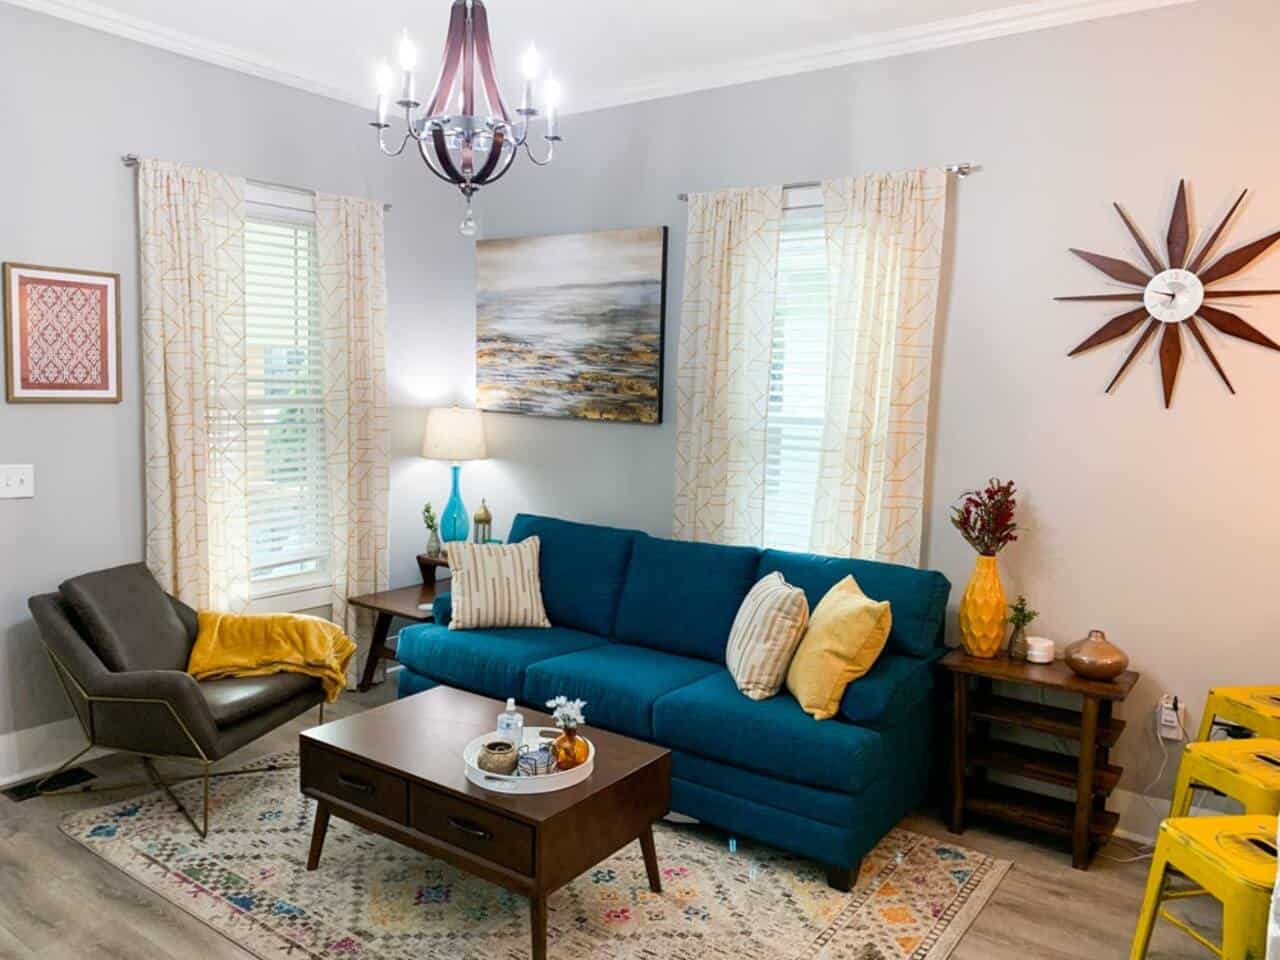 Image of Airbnb rental in Kansas City, Missouri